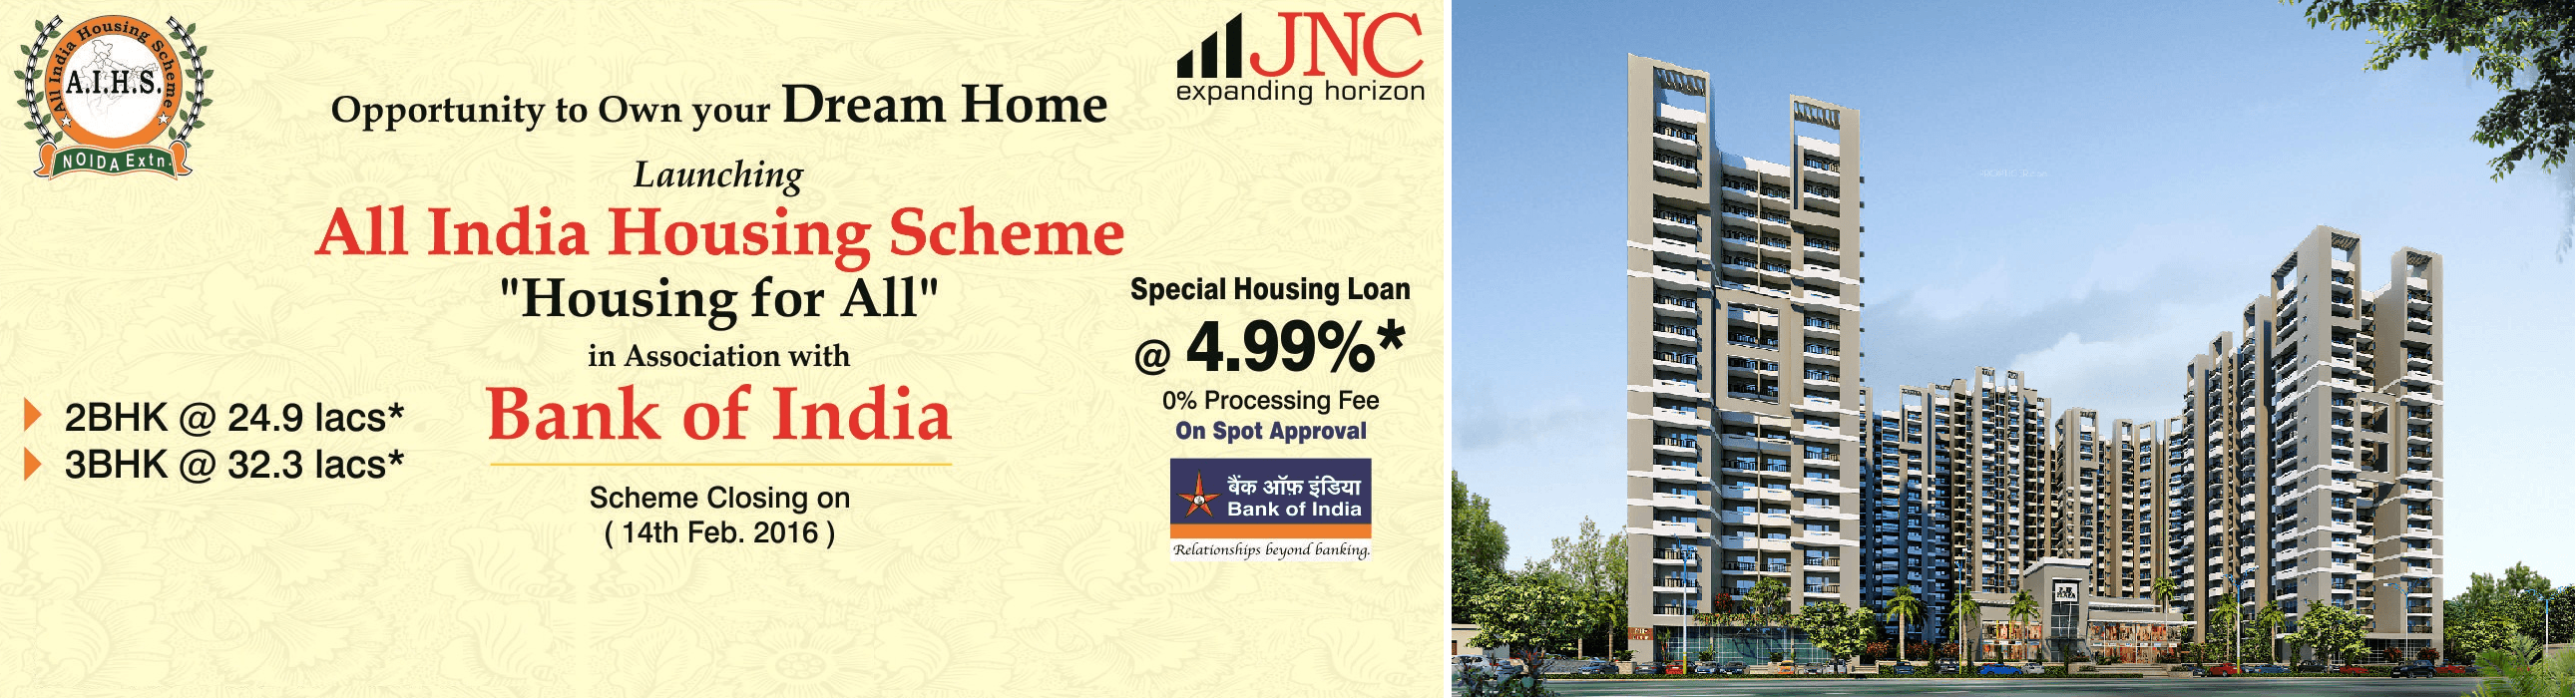 JNC All India Housing Schemes Noida Extension